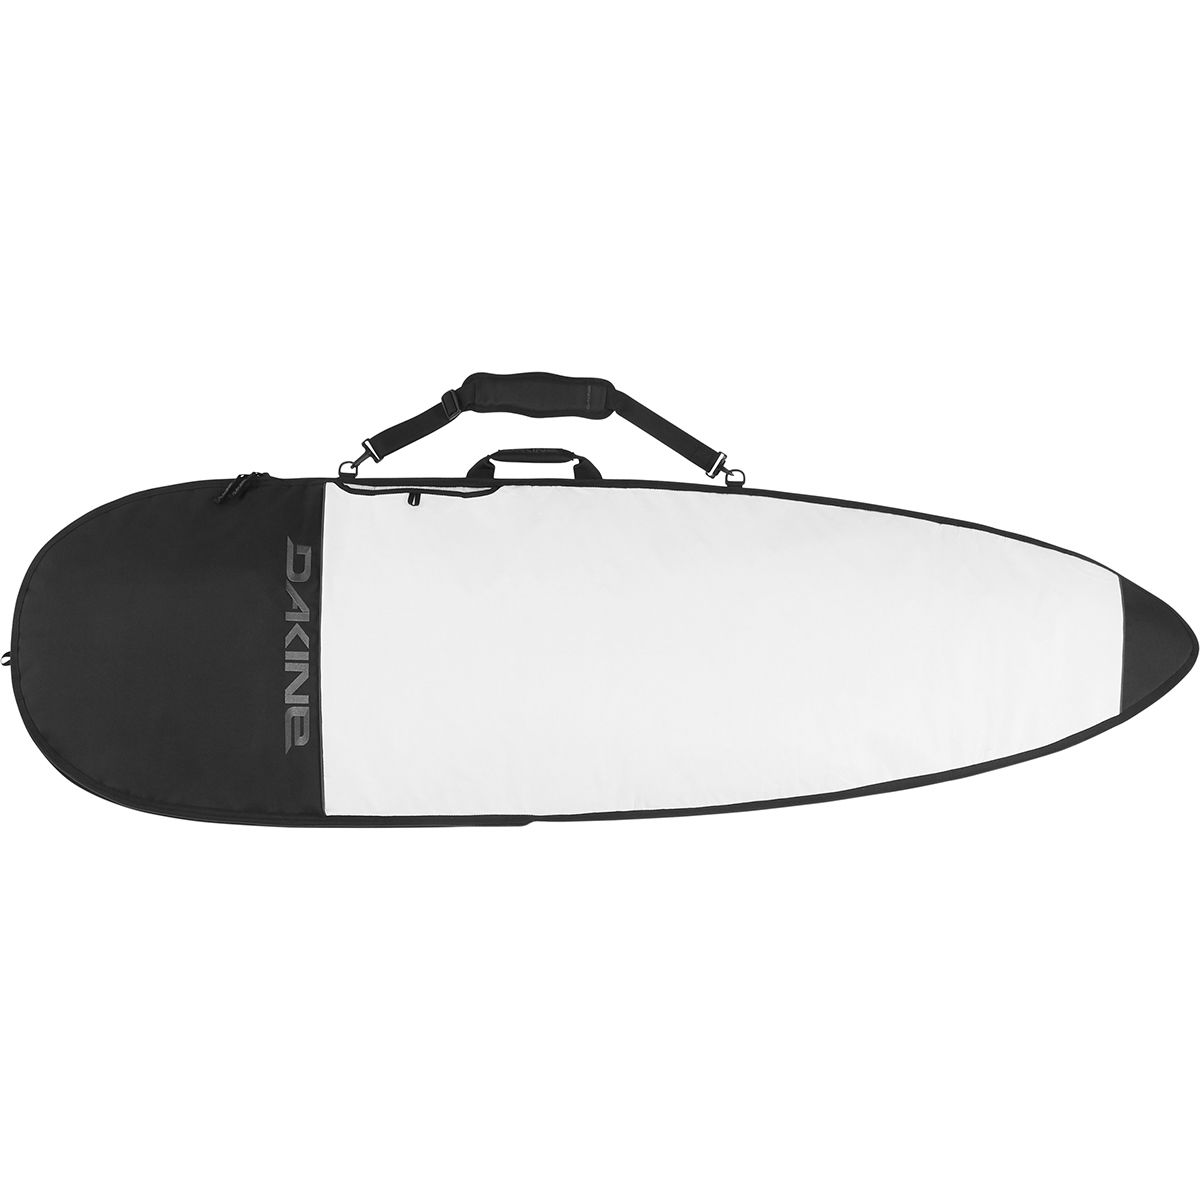 Daylight Thruster Surfboard Bag